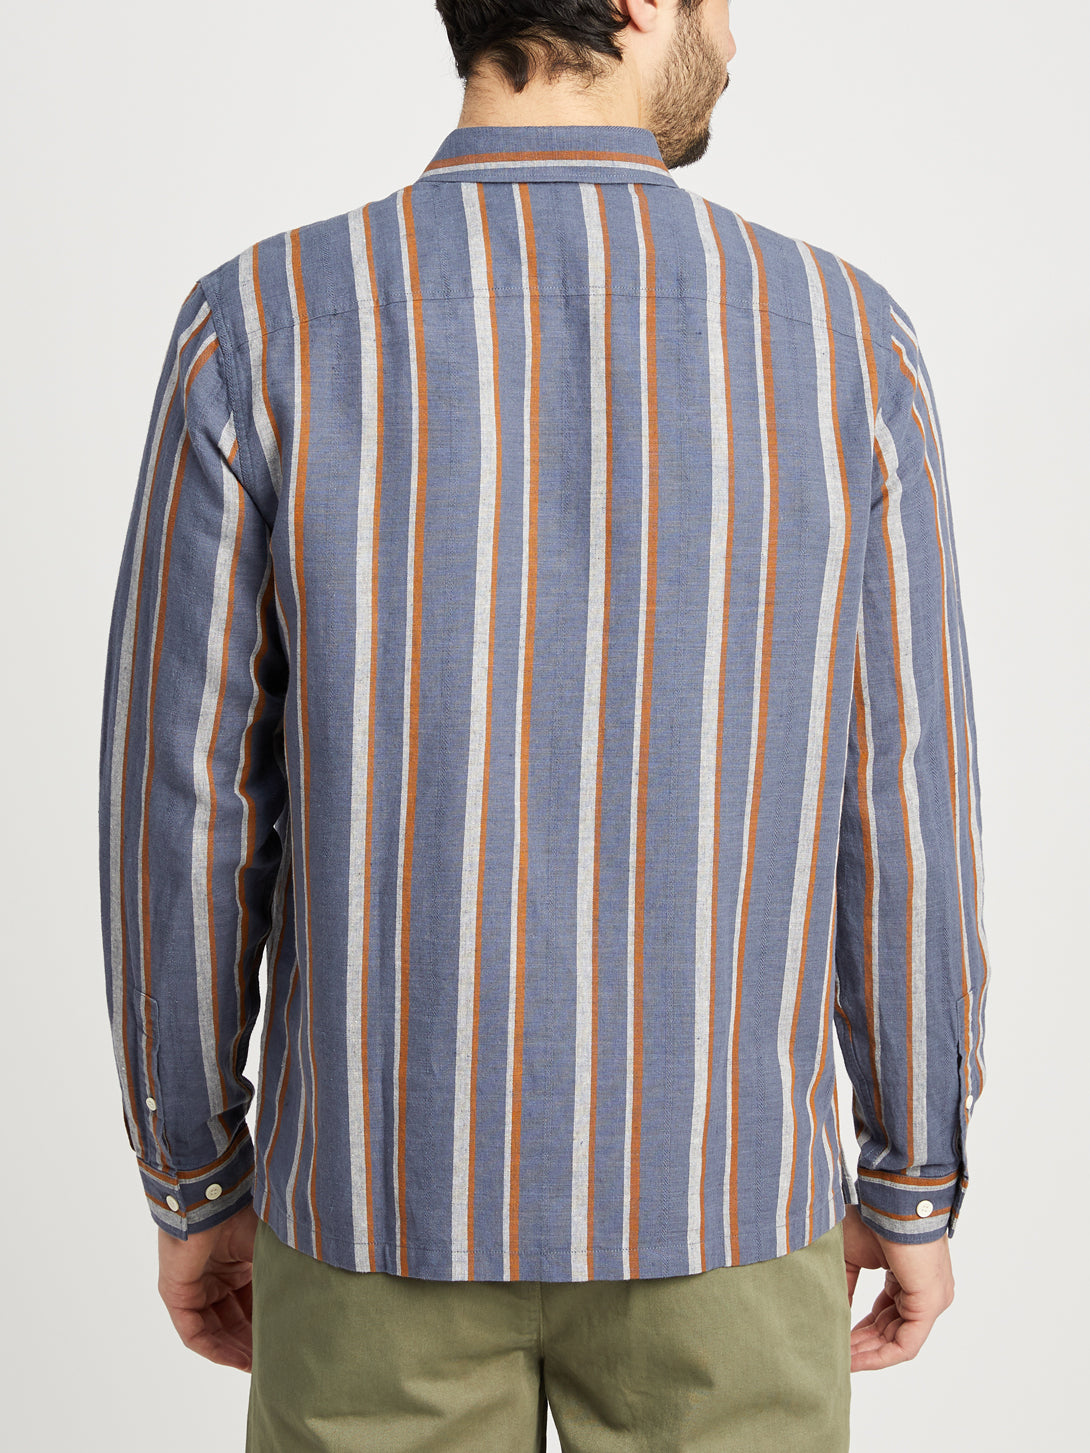 BLUE STRIPE button down shirt for men vance stripe linen cotton shirt ons clothing